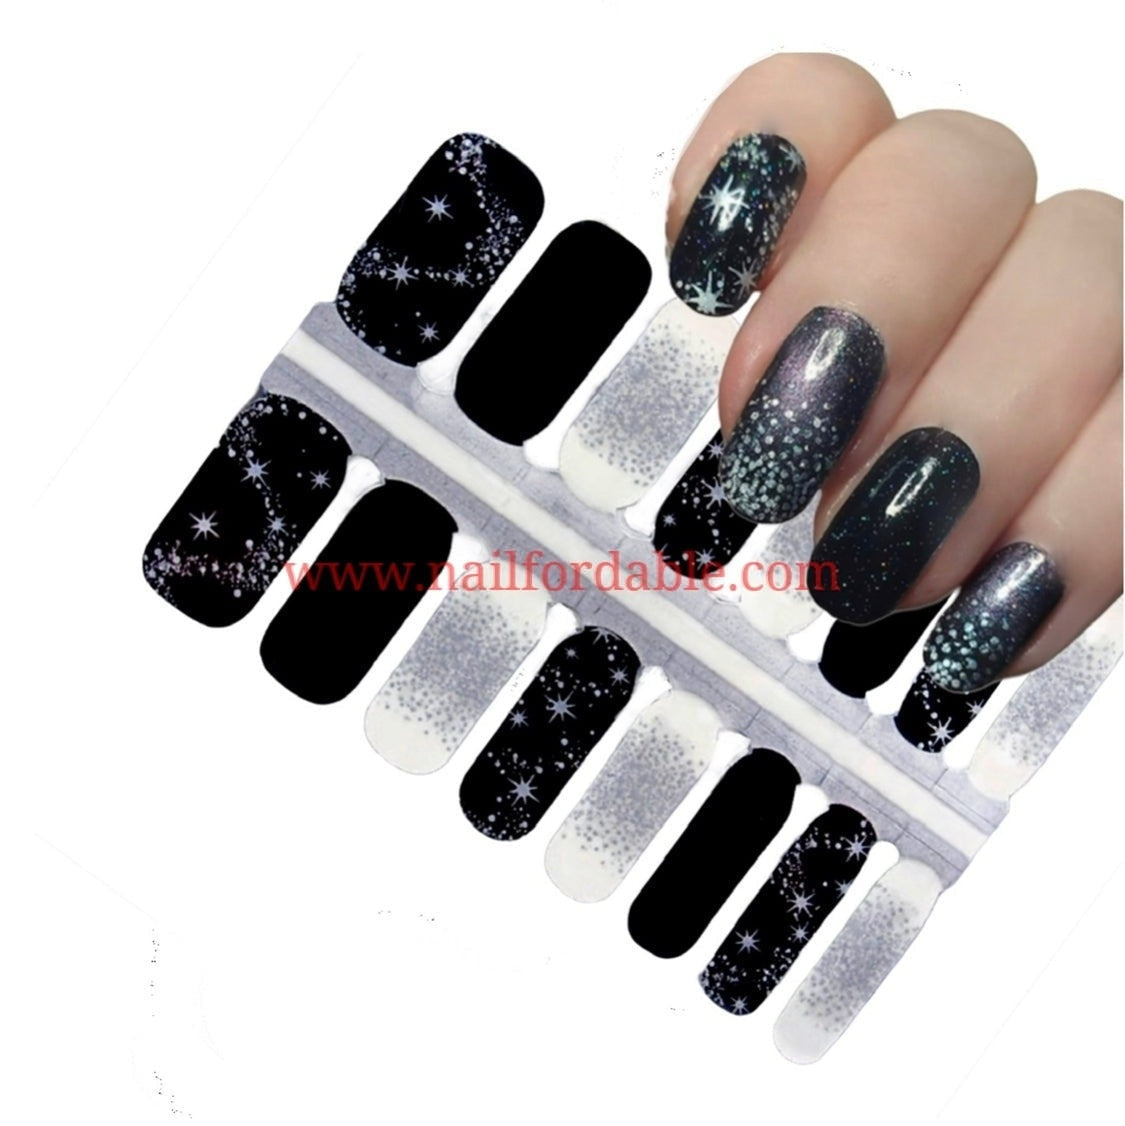 Starlights Nail Wraps | Semi Cured Gel Wraps | Gel Nail Wraps |Nail Polish | Nail Stickers